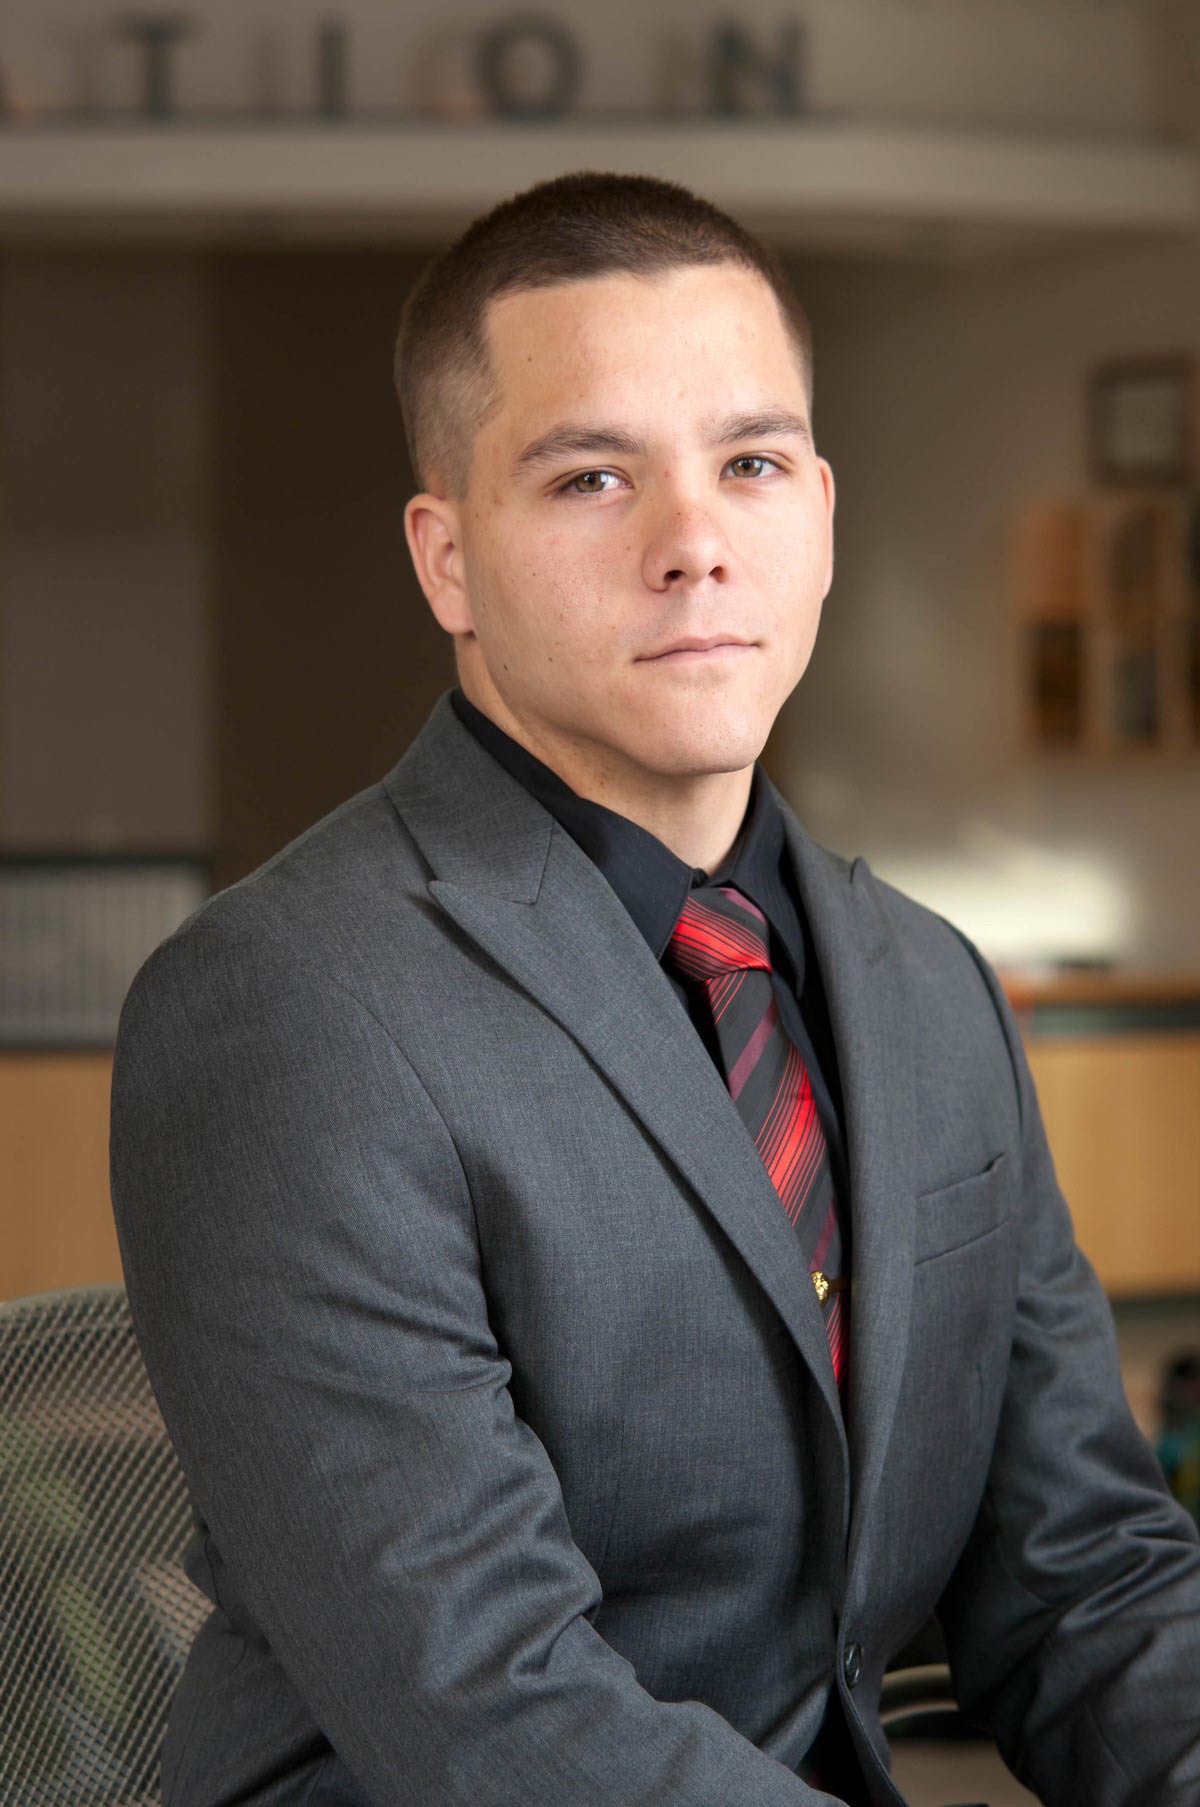 Alumnus Brett Travis, 2016 graduate in International Studies